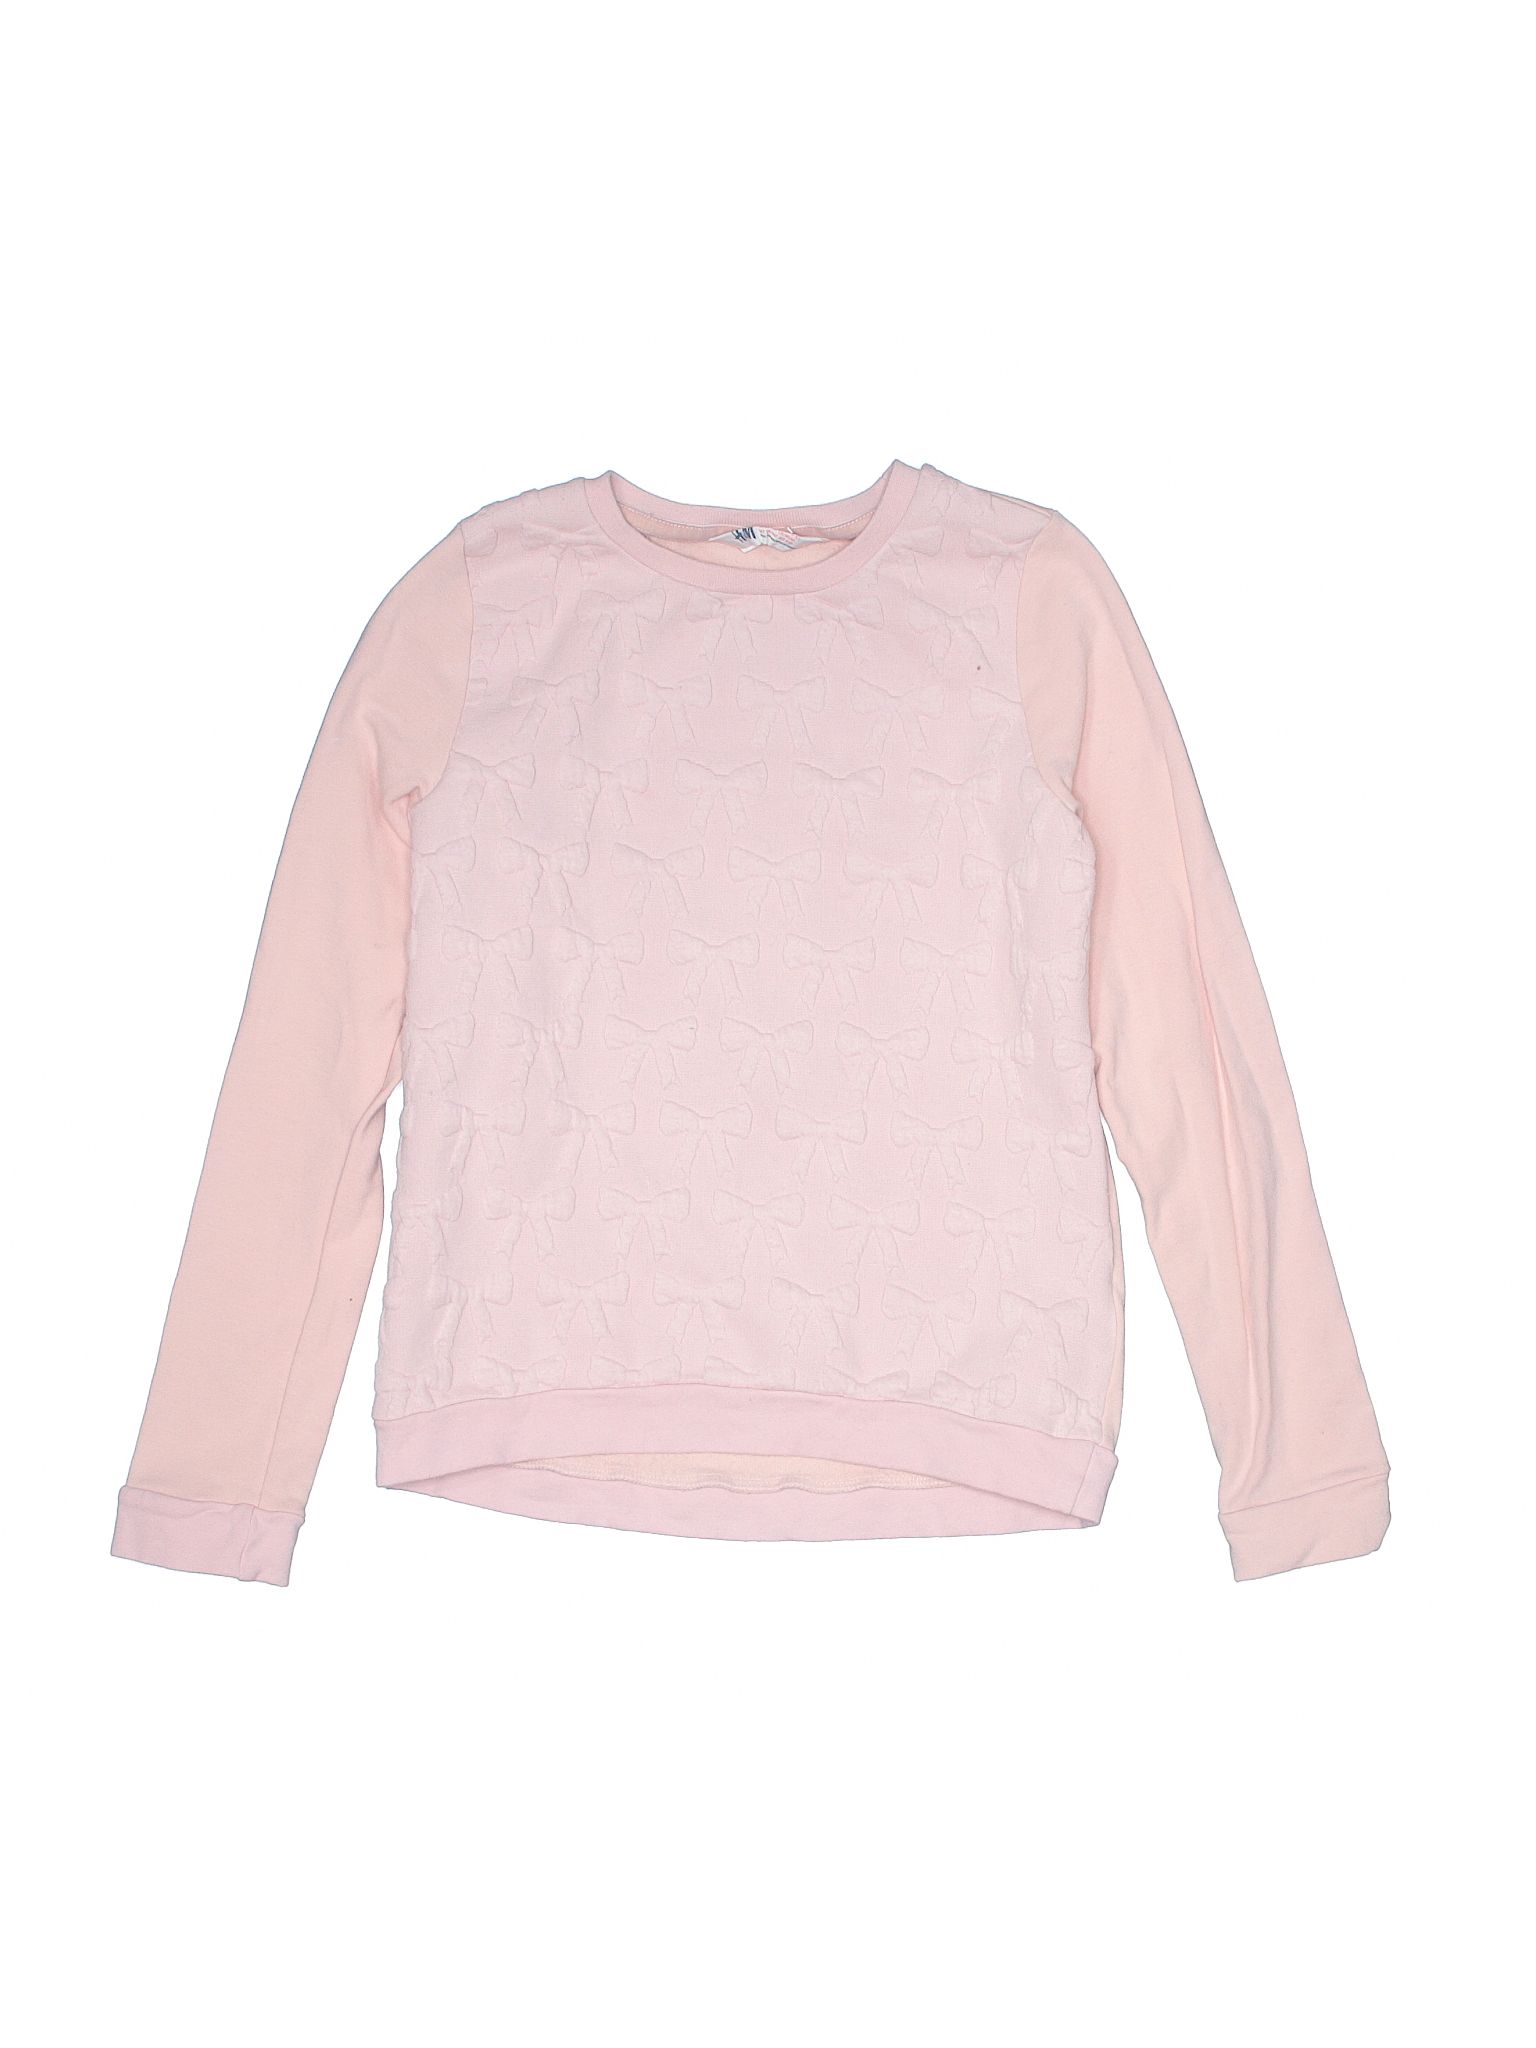 H&M Sweatshirt Size 8: Light Pink Girls Tops - 31584013 | thredUP